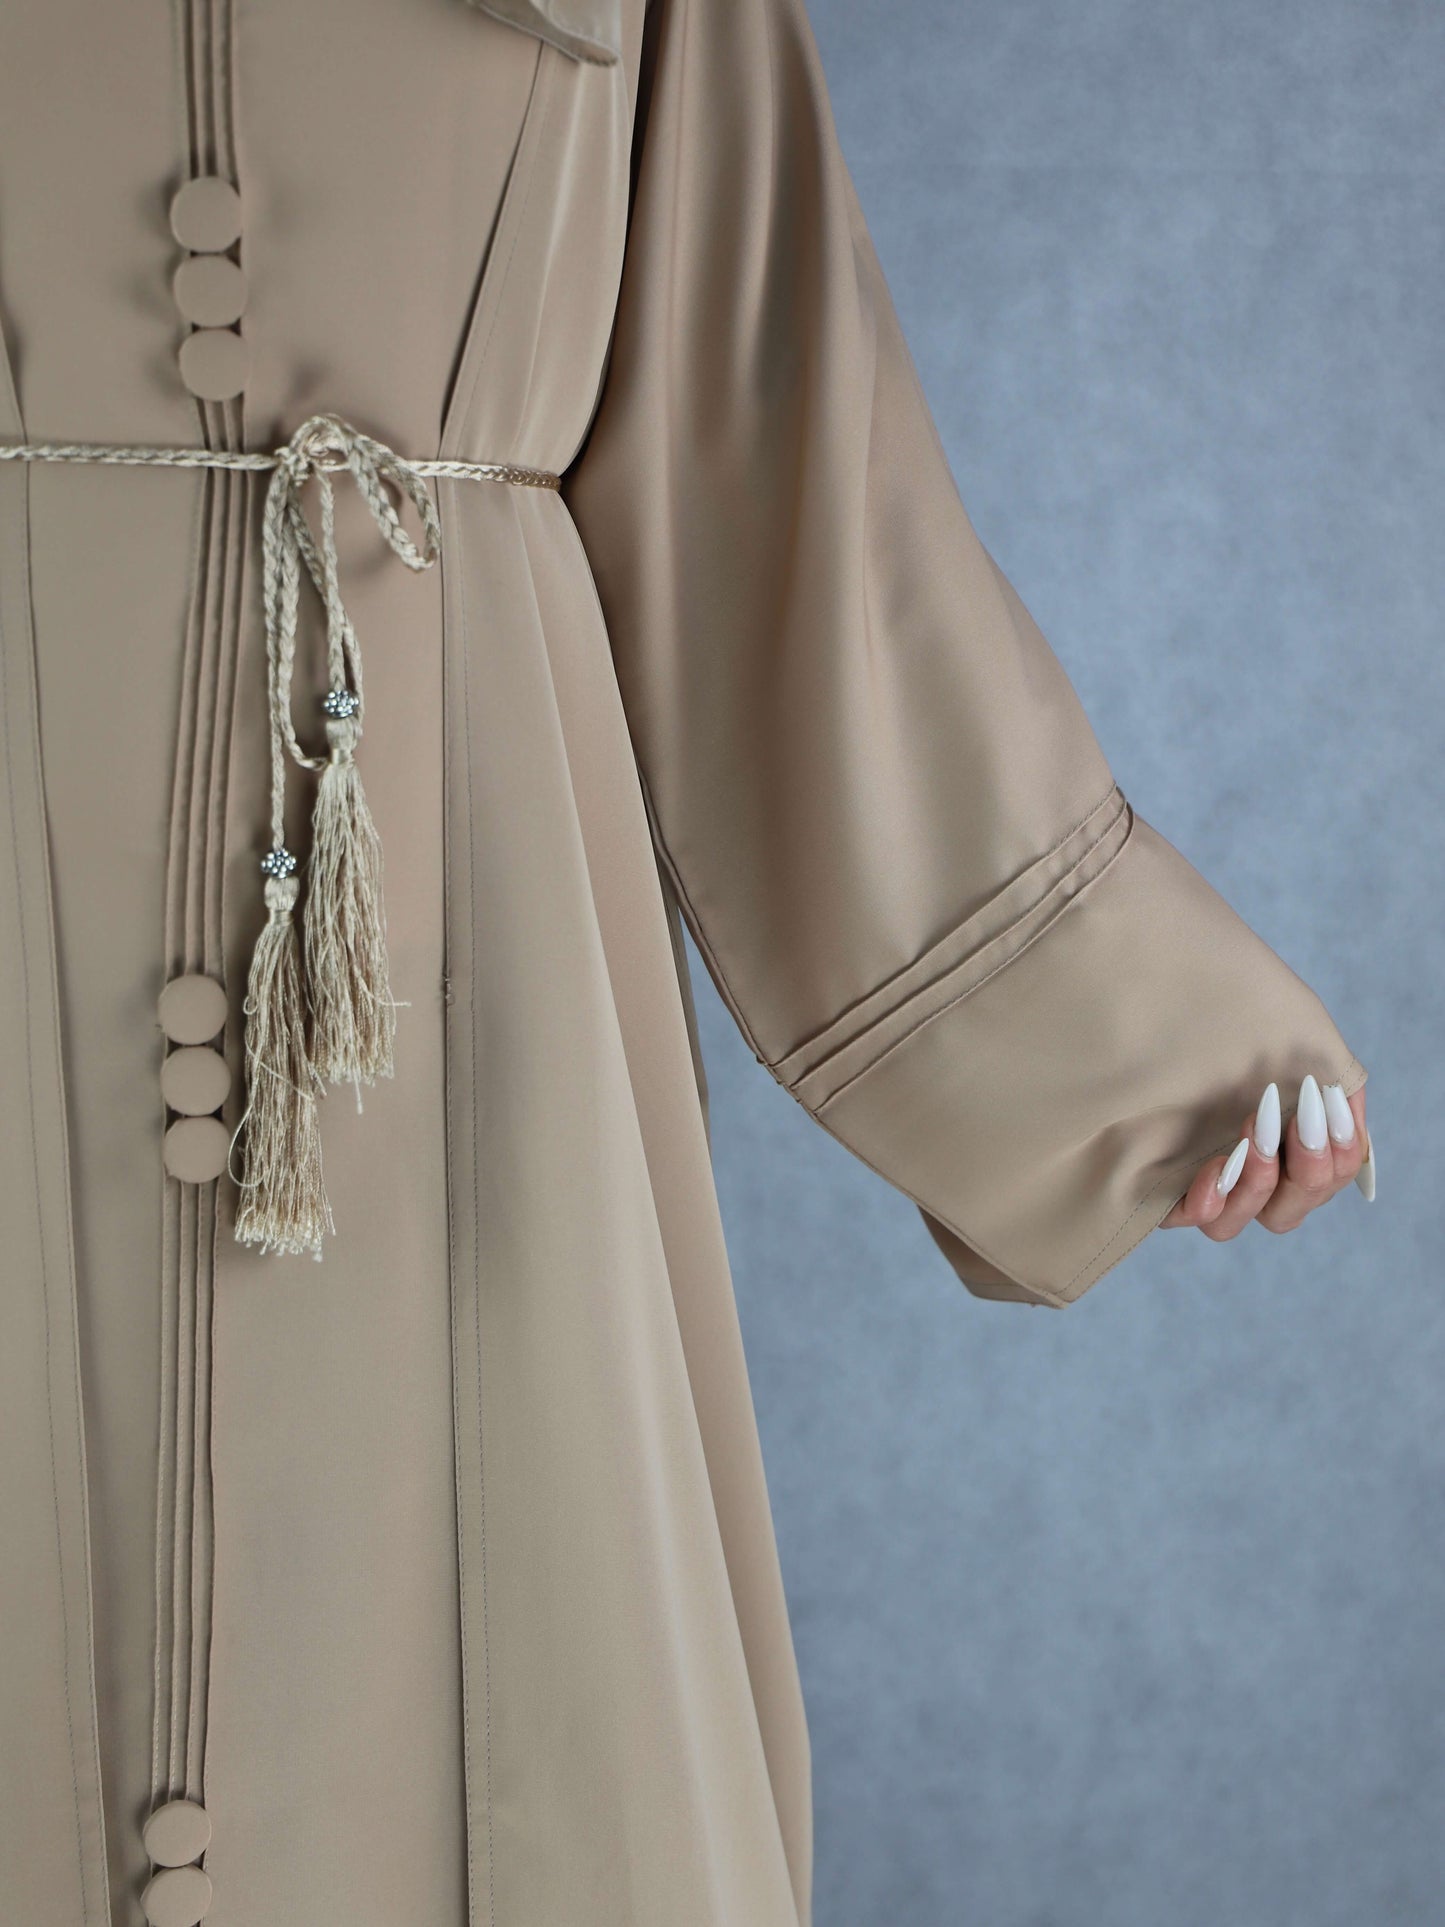 Simple Yet Elegant Four Piece Blush Colour Abaya